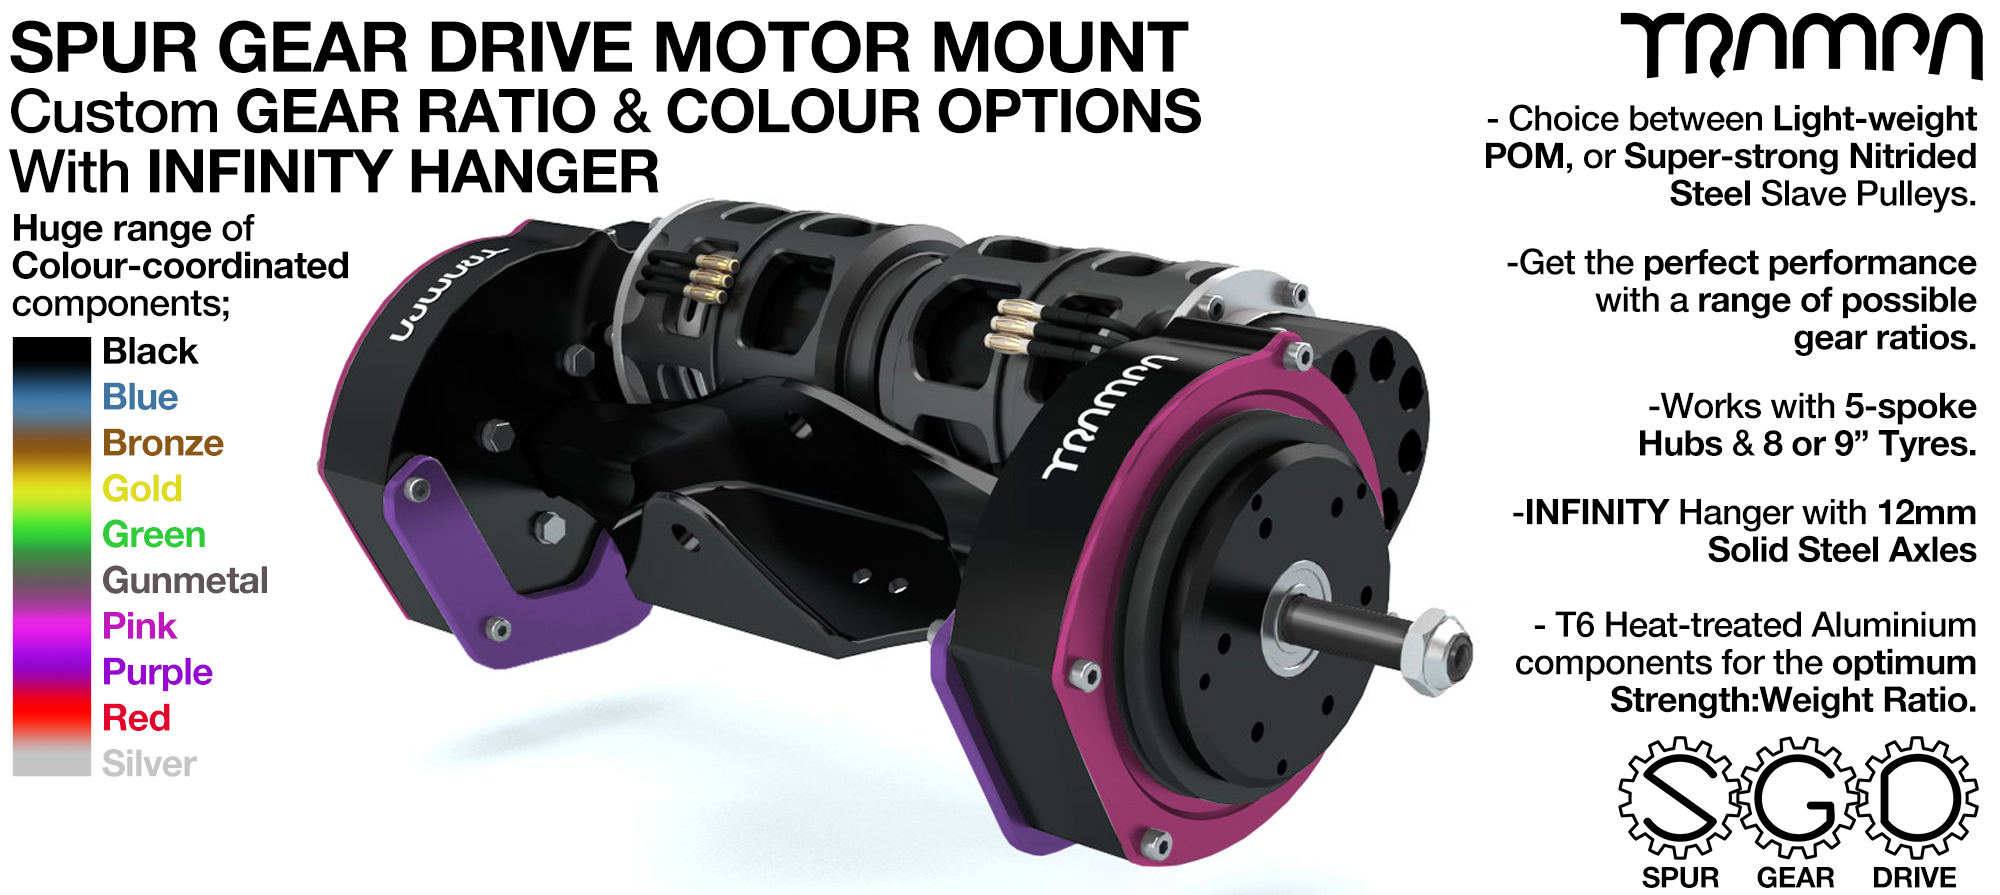 Mountainboard Spur Gear Drive TWIN Motor Mounts with Motors & INFINITY Hanger